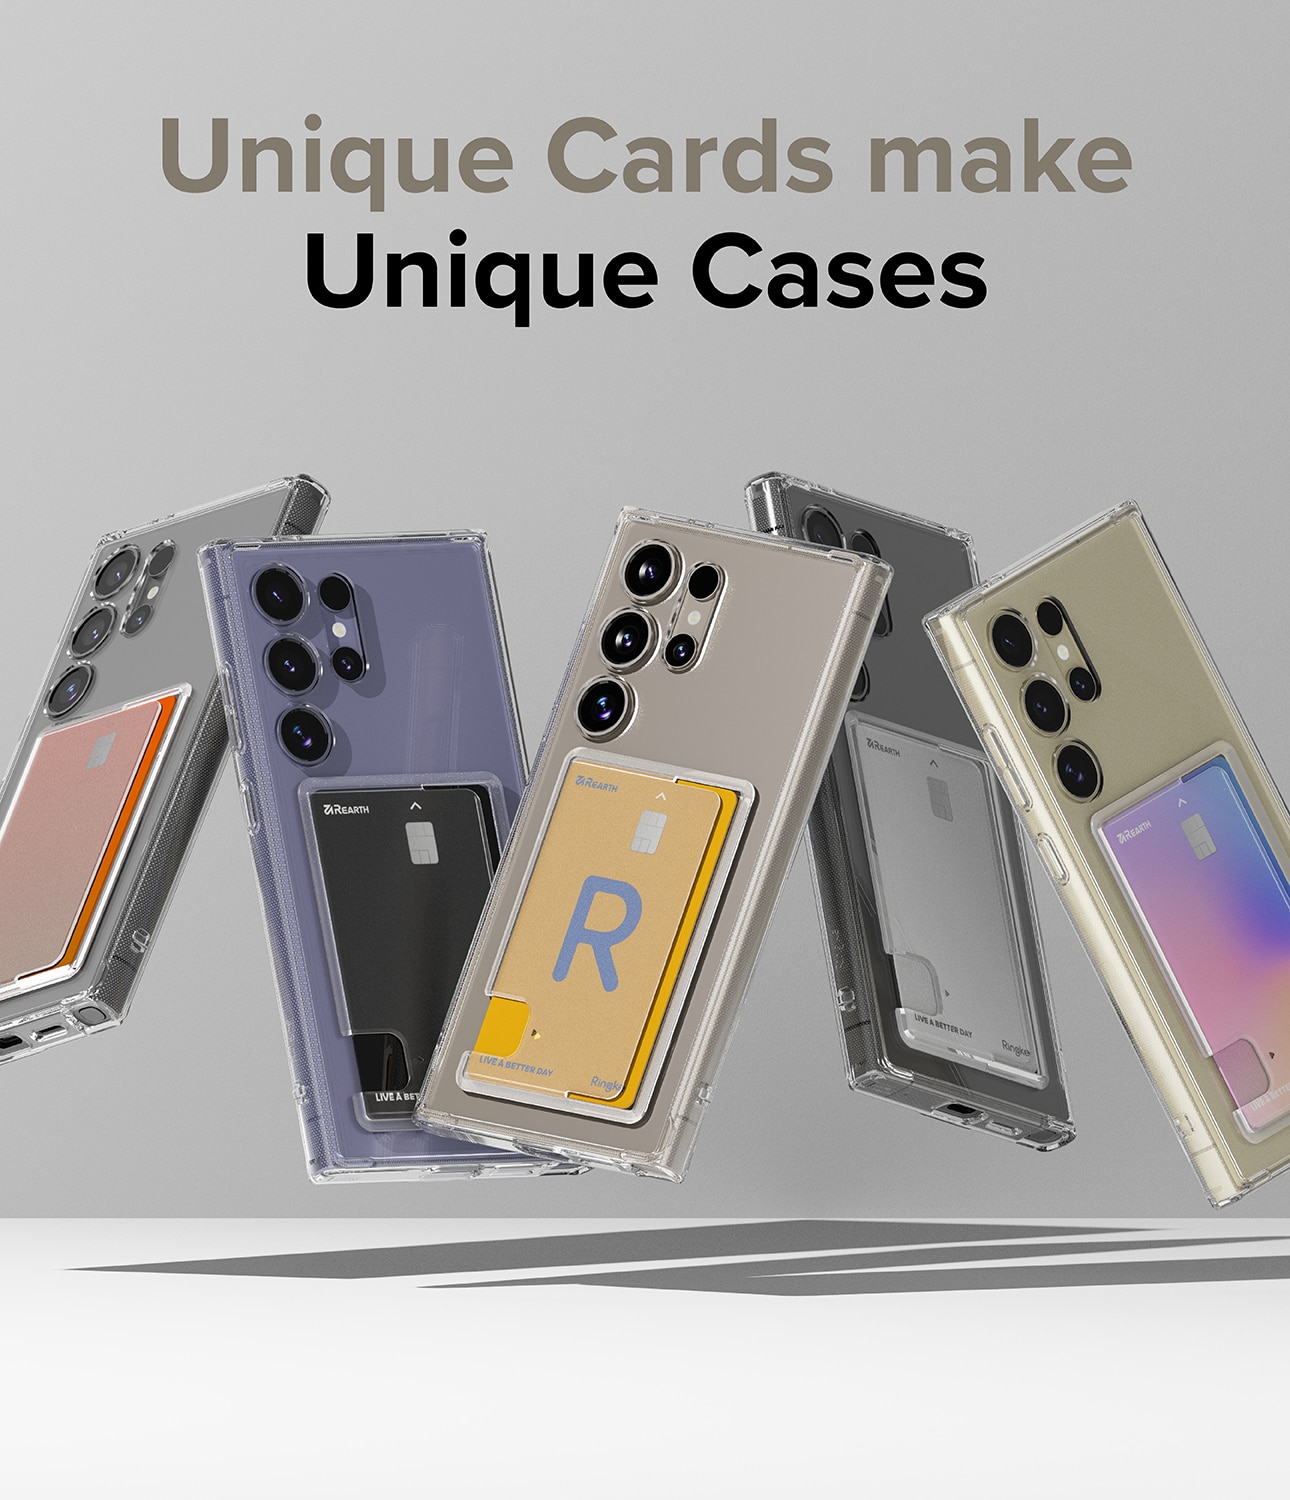 Samsung Galaxy S24 Ultra Fusion Card Case Transparent